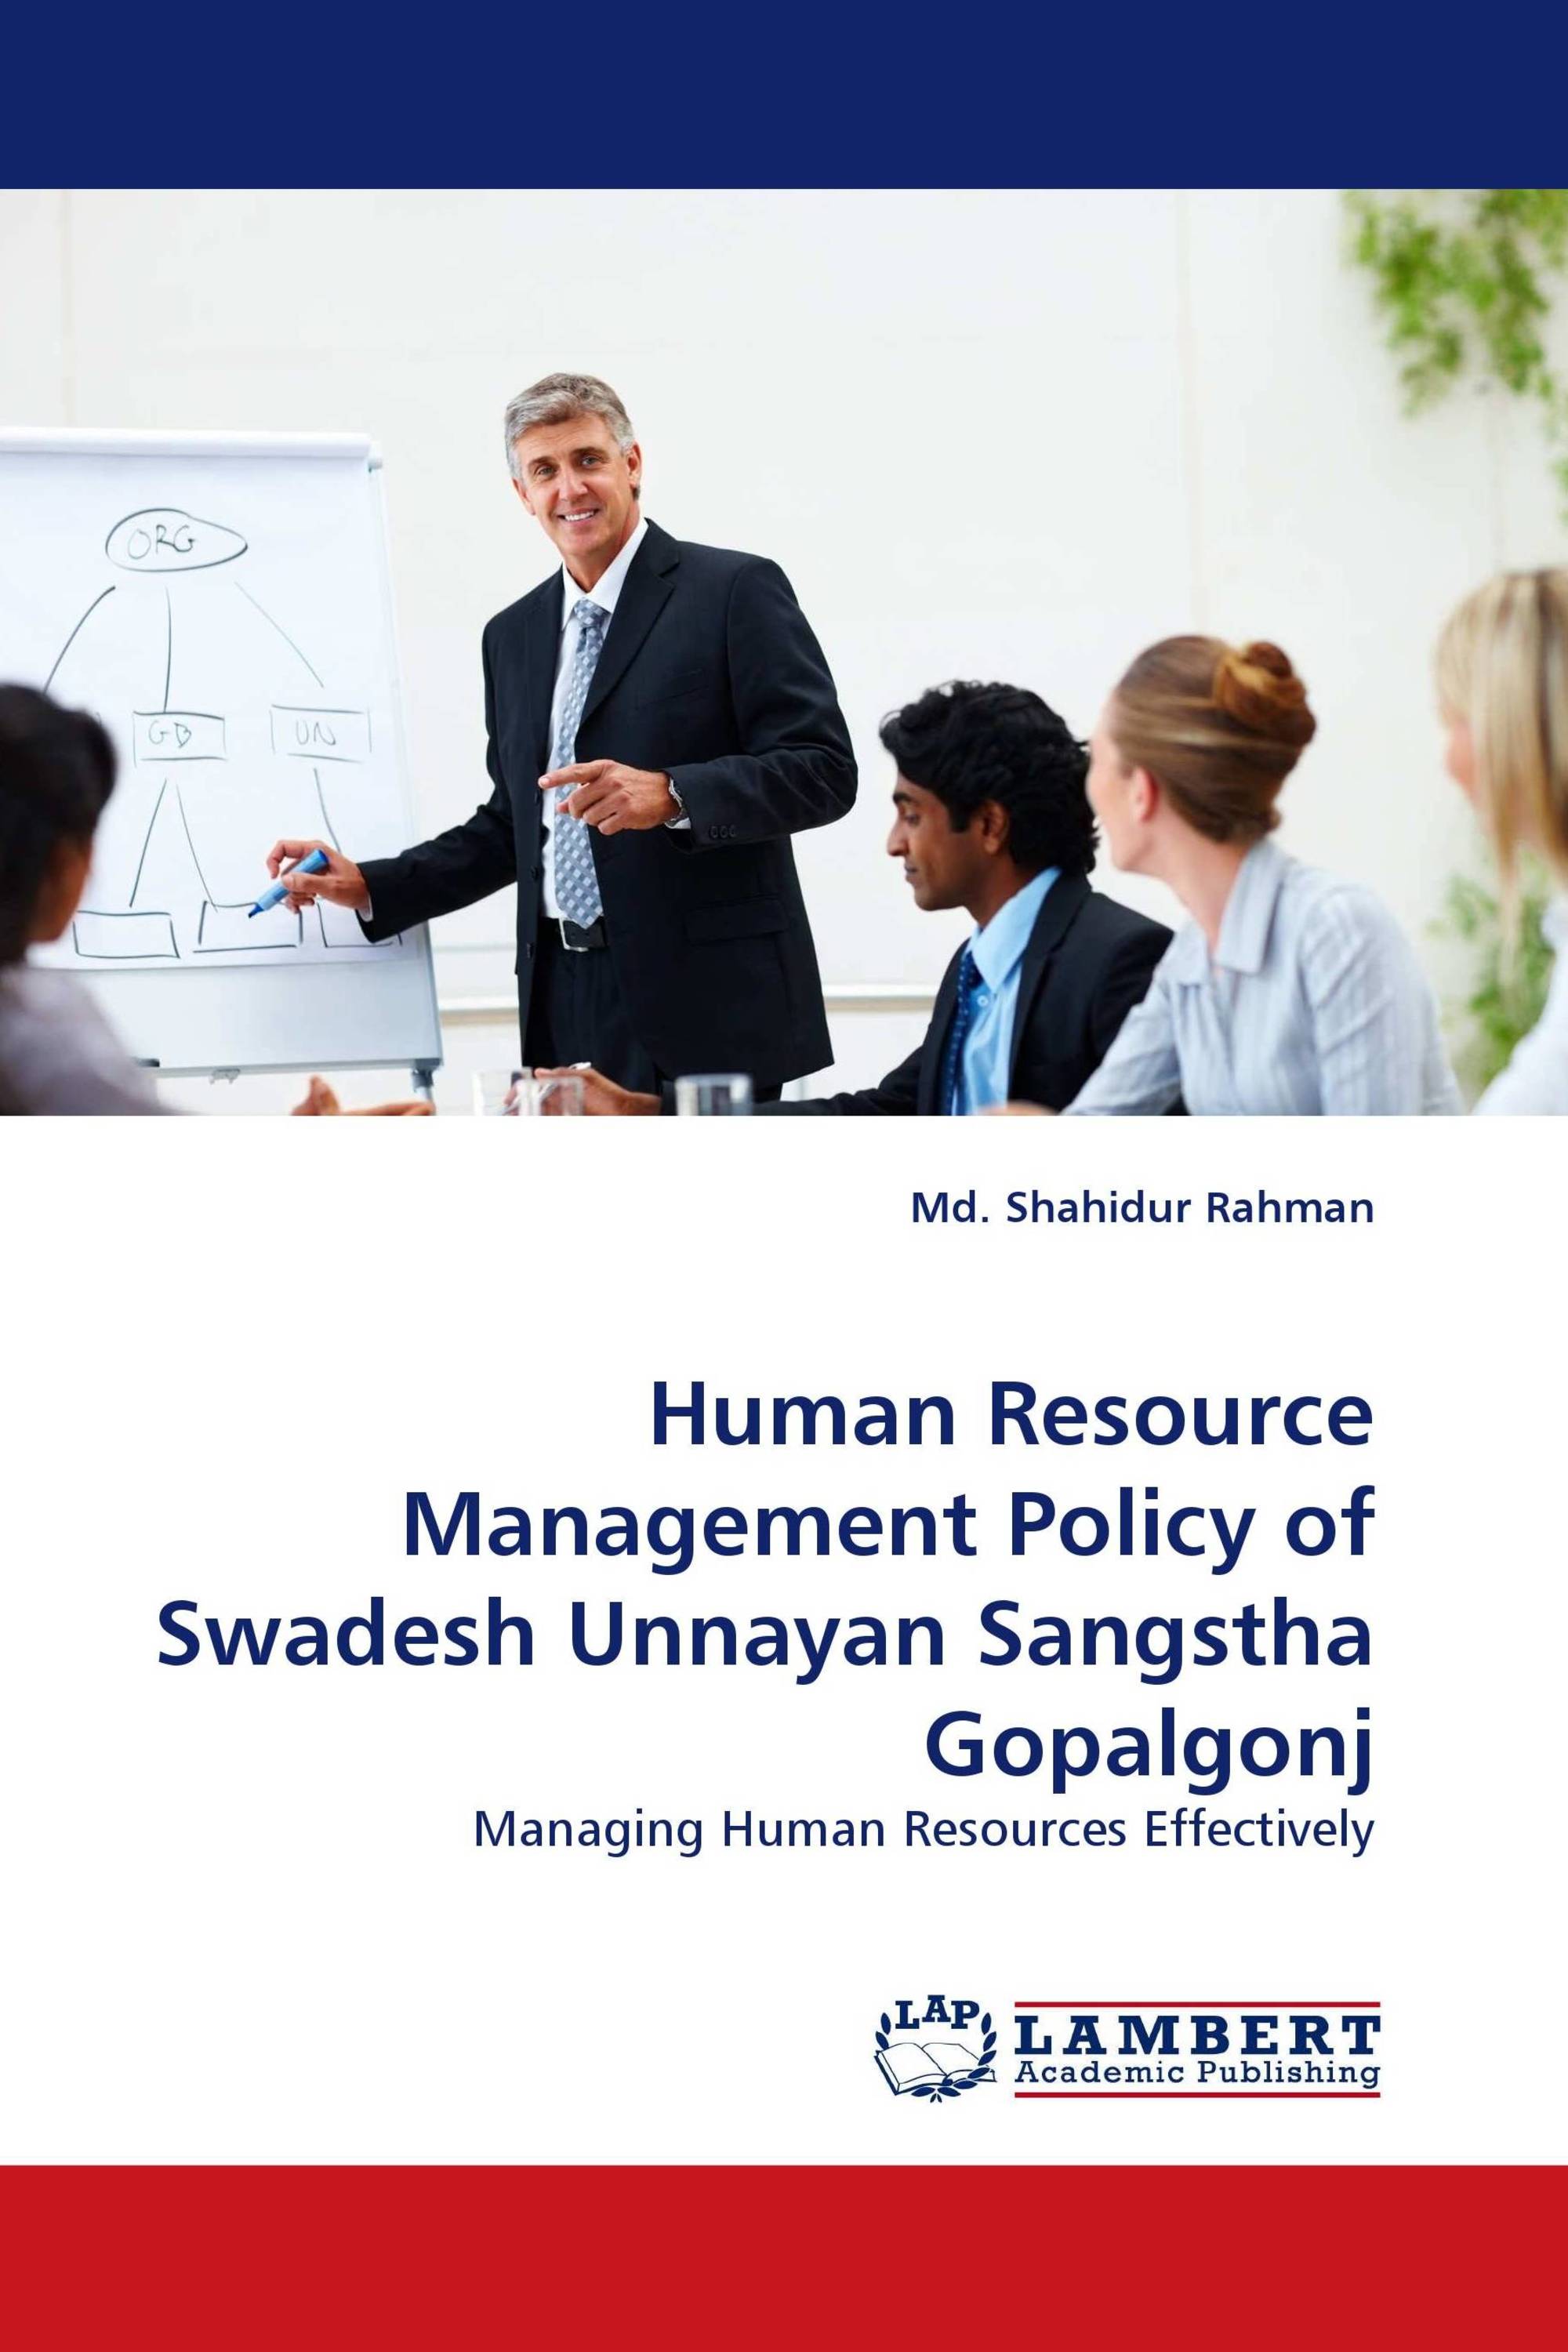 Human Resource Management Policy of Swadesh Unnayan Sangstha Gopalgonj